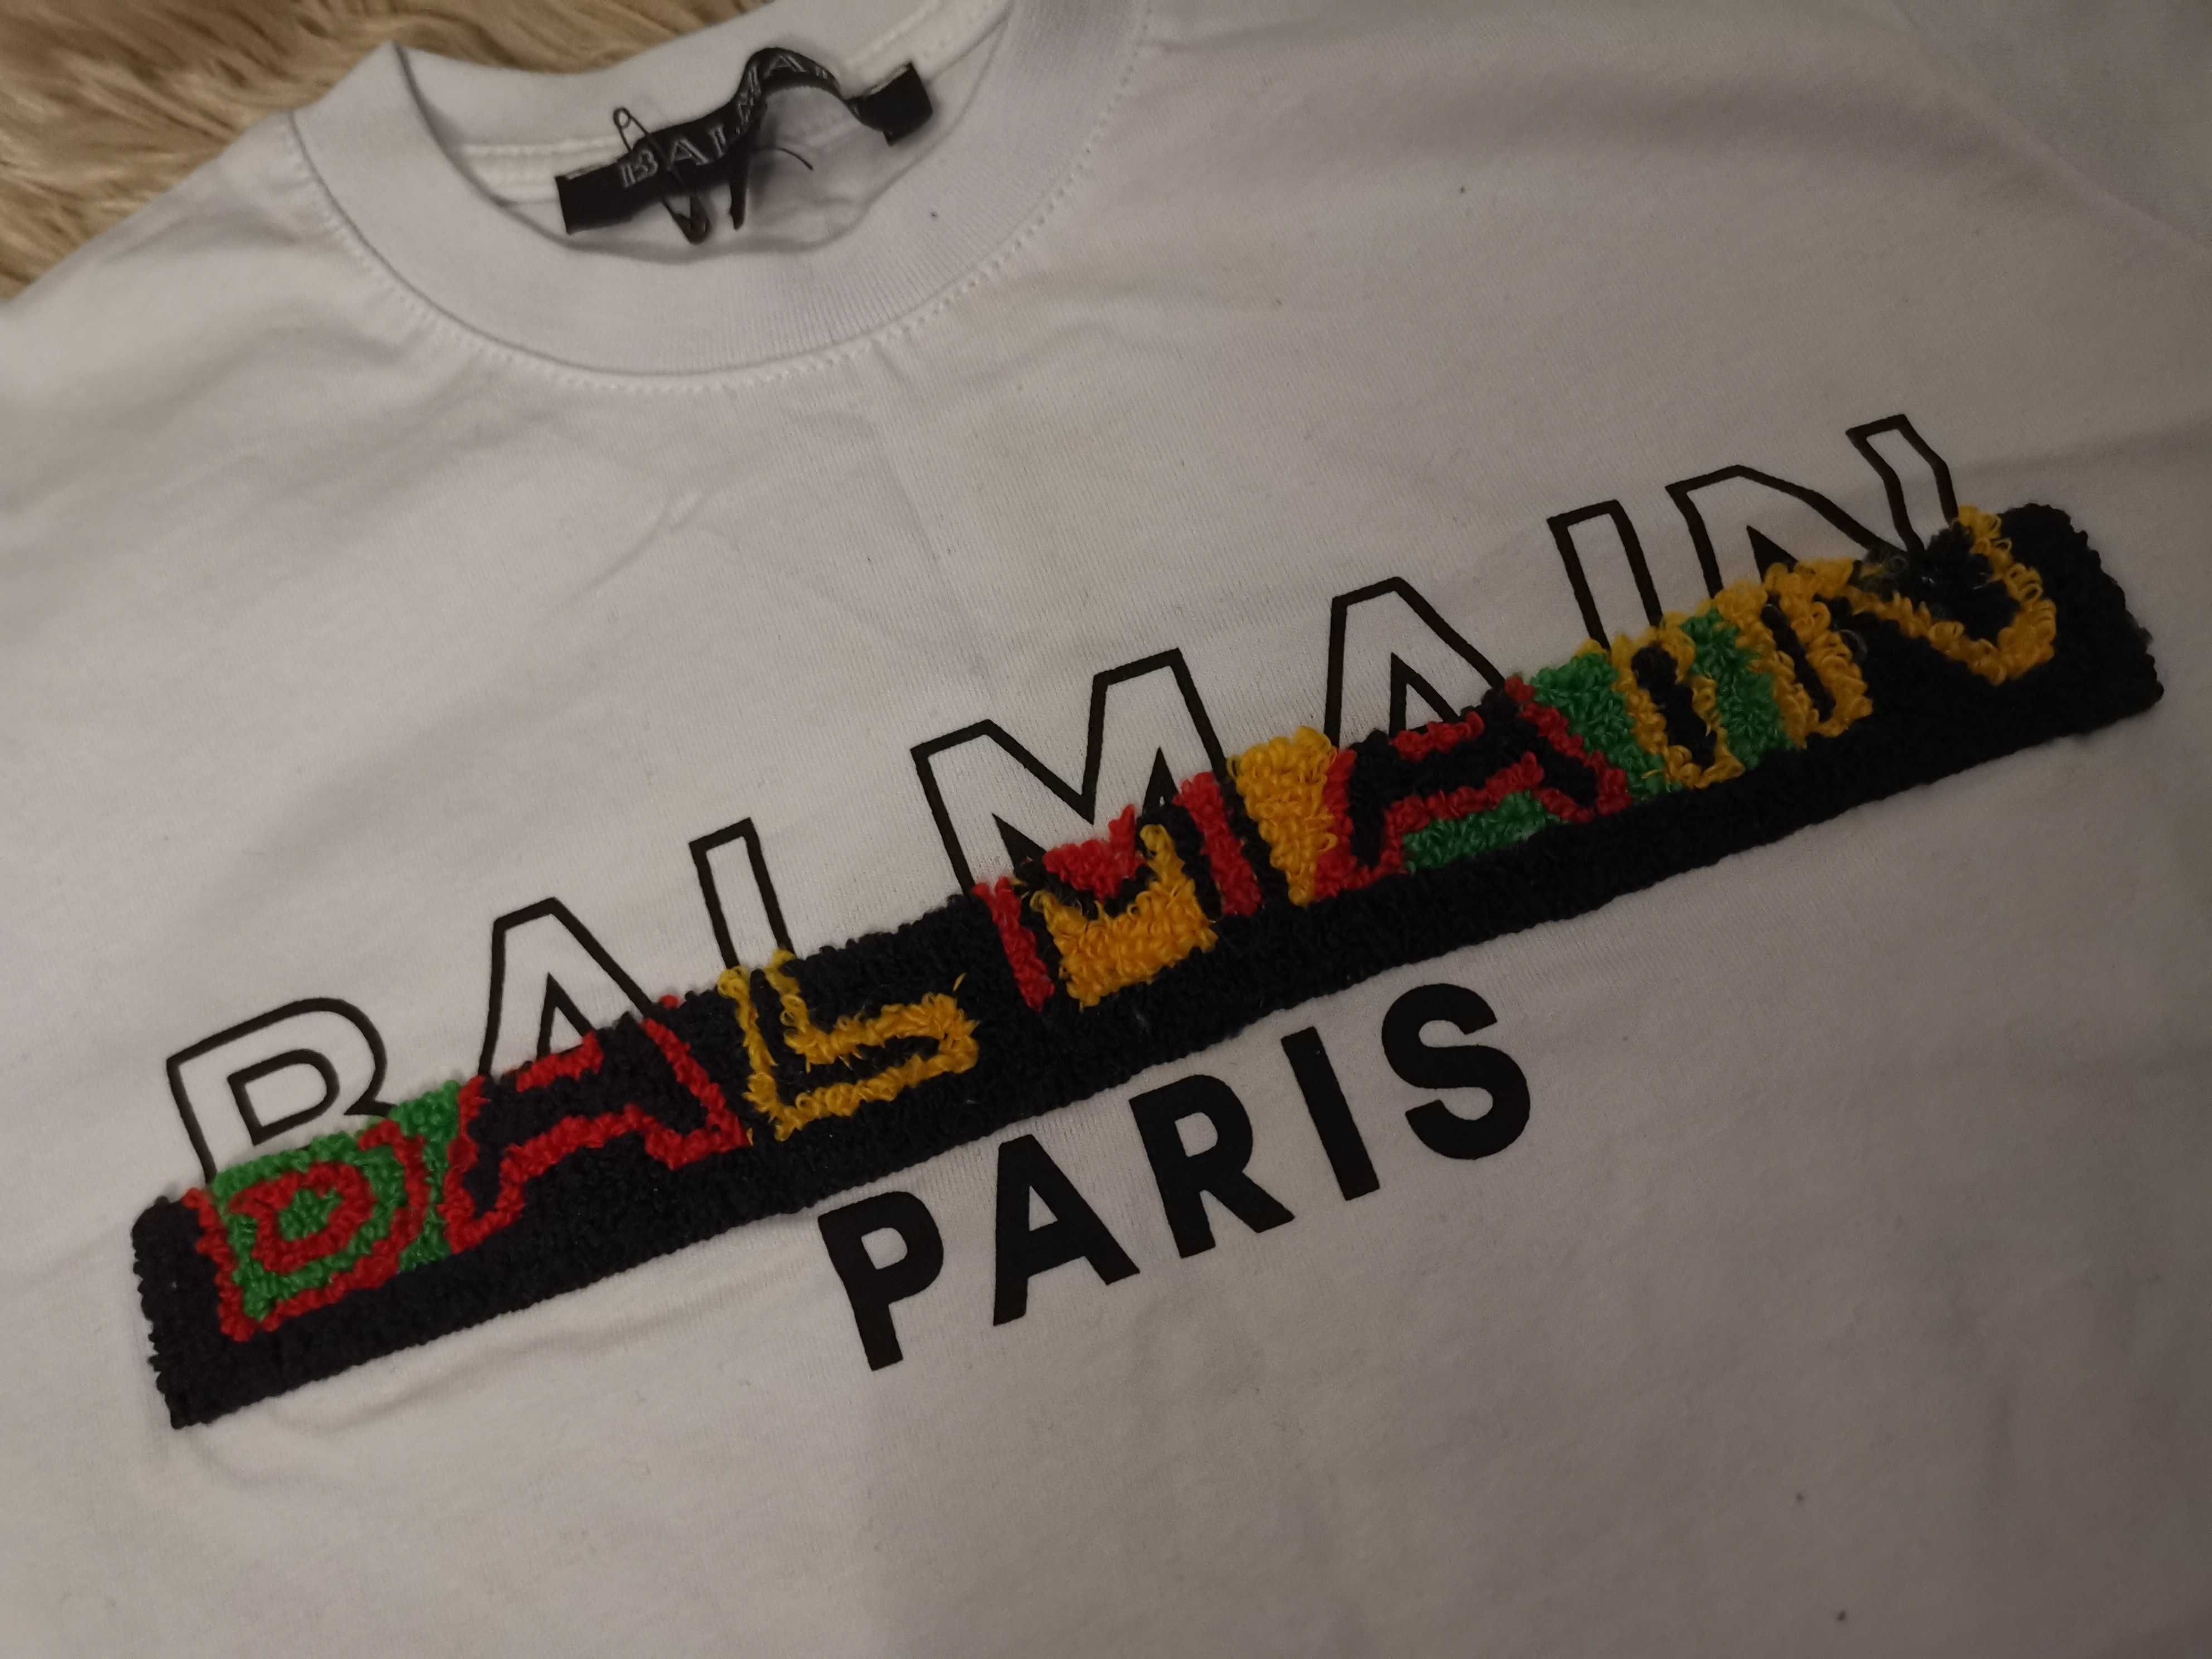 Nowy T-shirt Balmain Paris